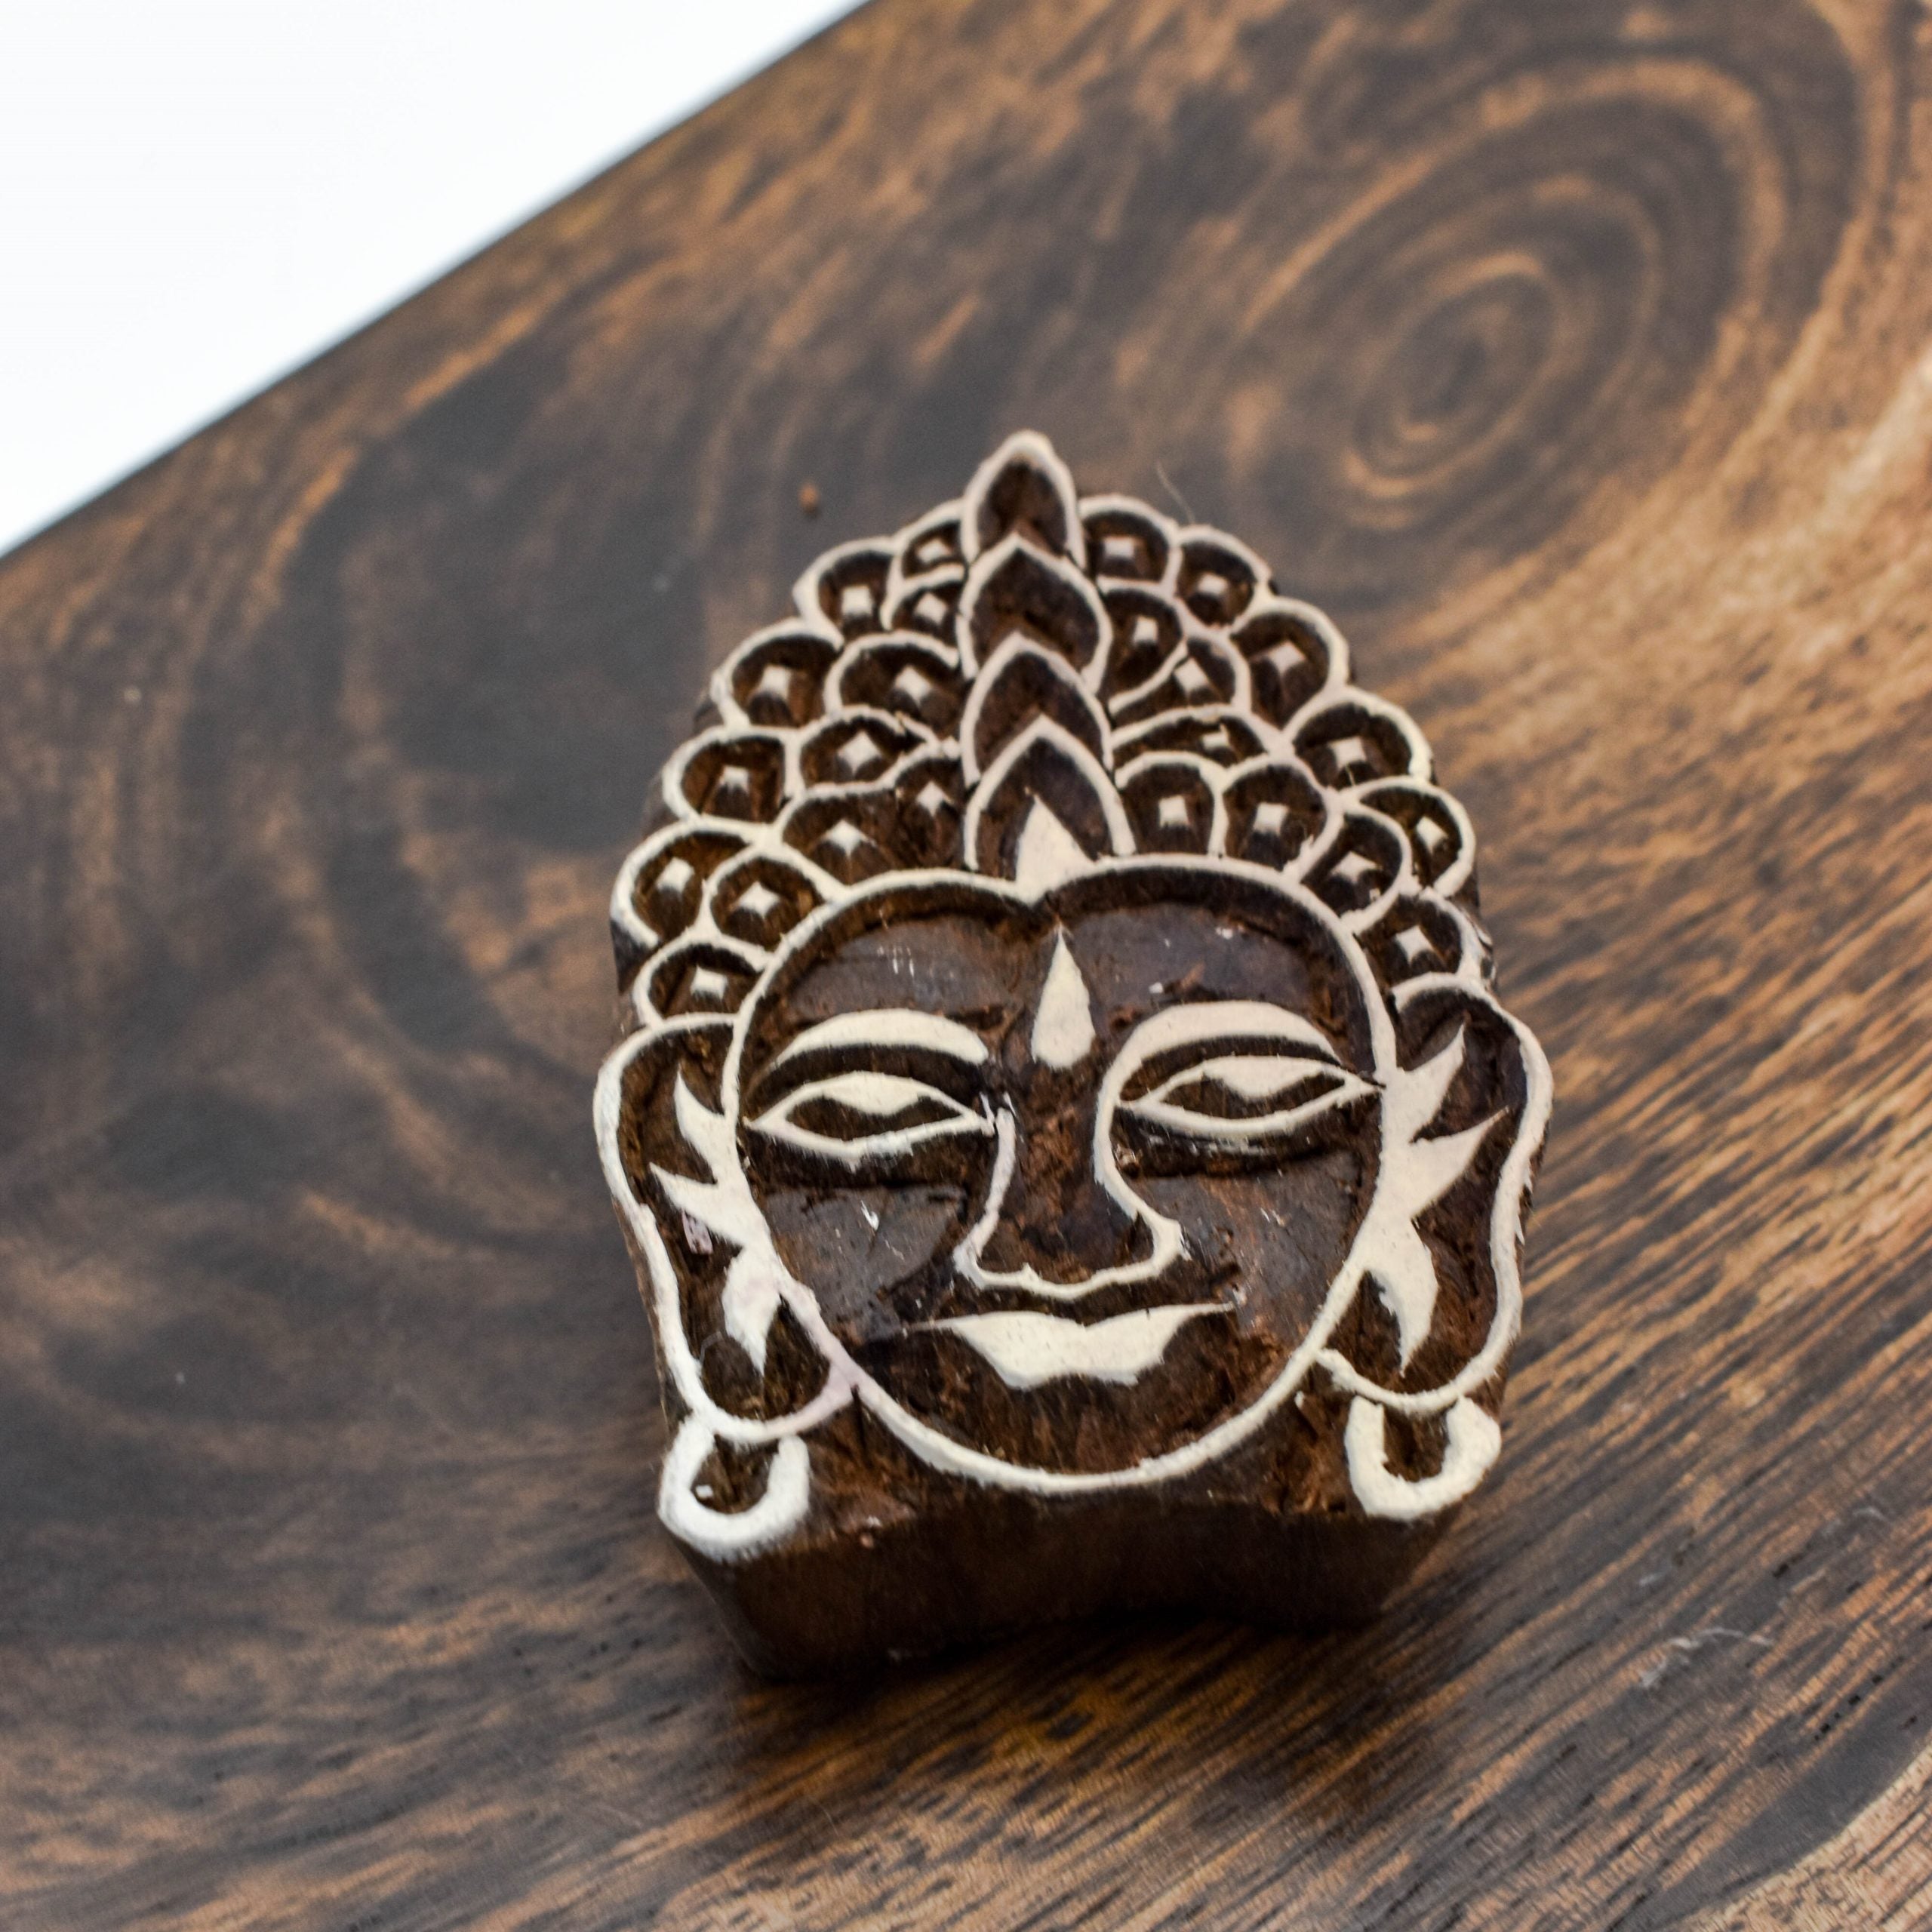 Traditional Indian Wood Blocks For Printing - Spiritual Symbols